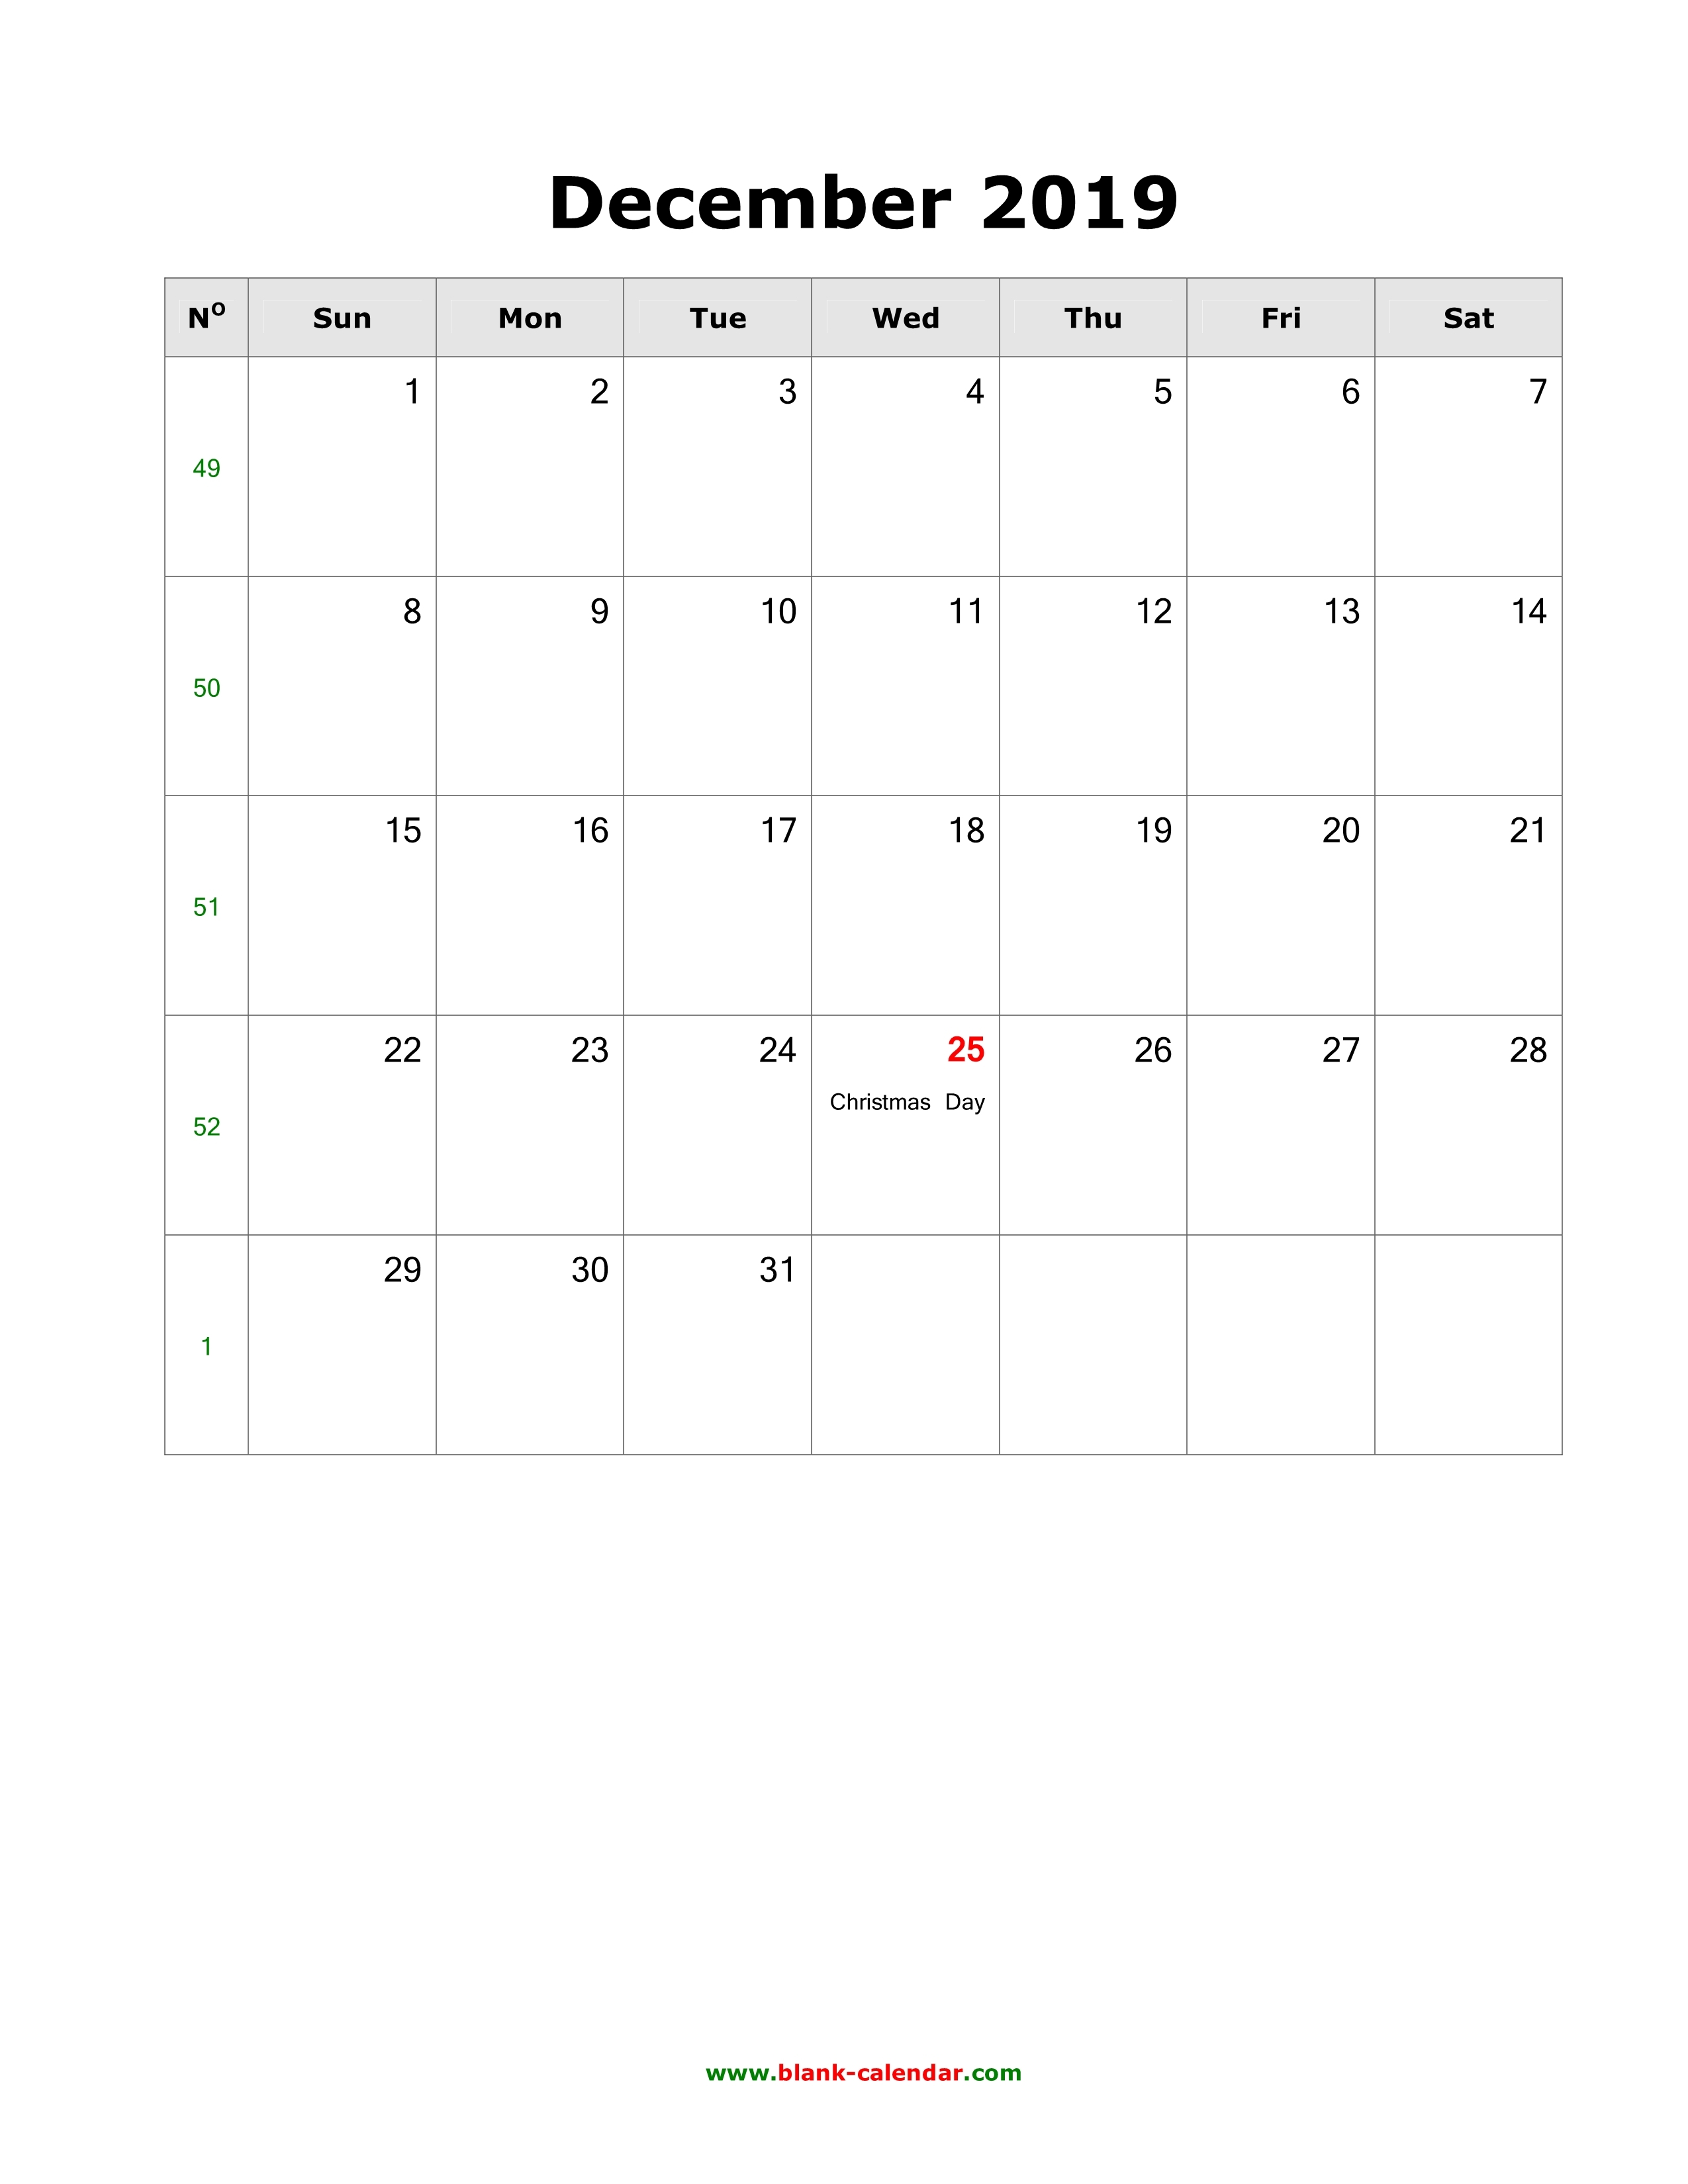 December 2019 Calendar Holidays